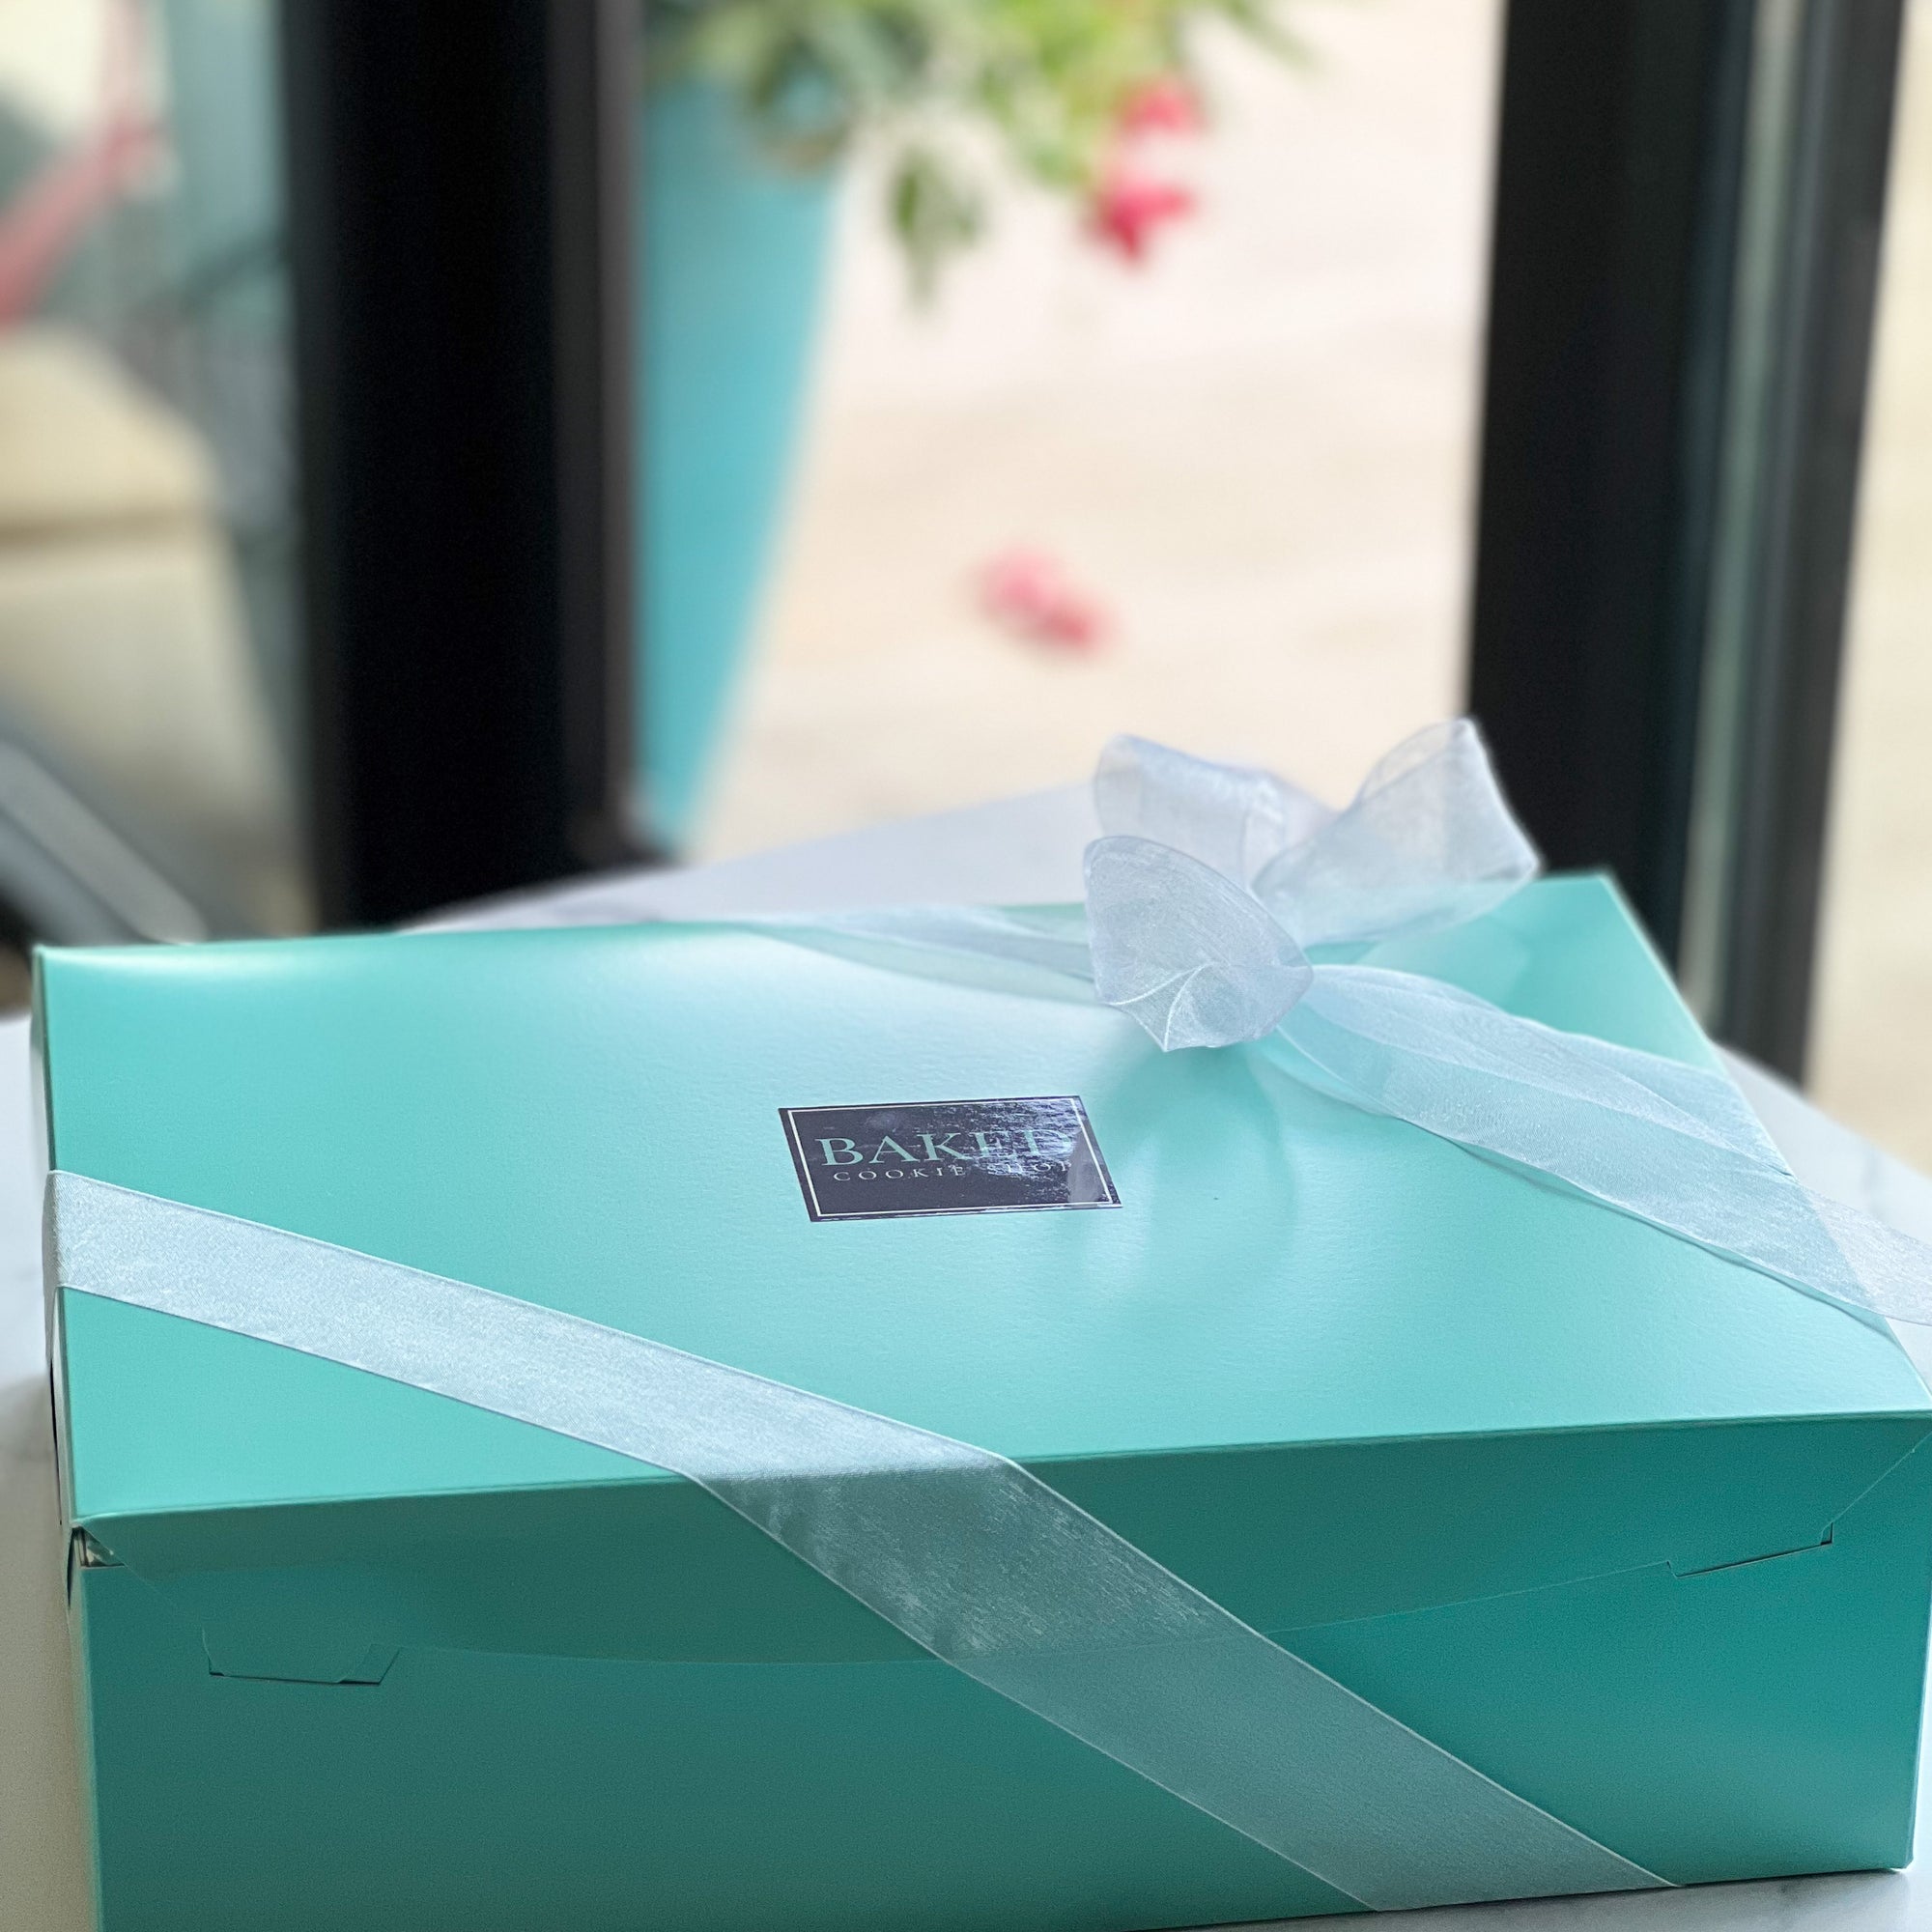 Baked Gift Box #1